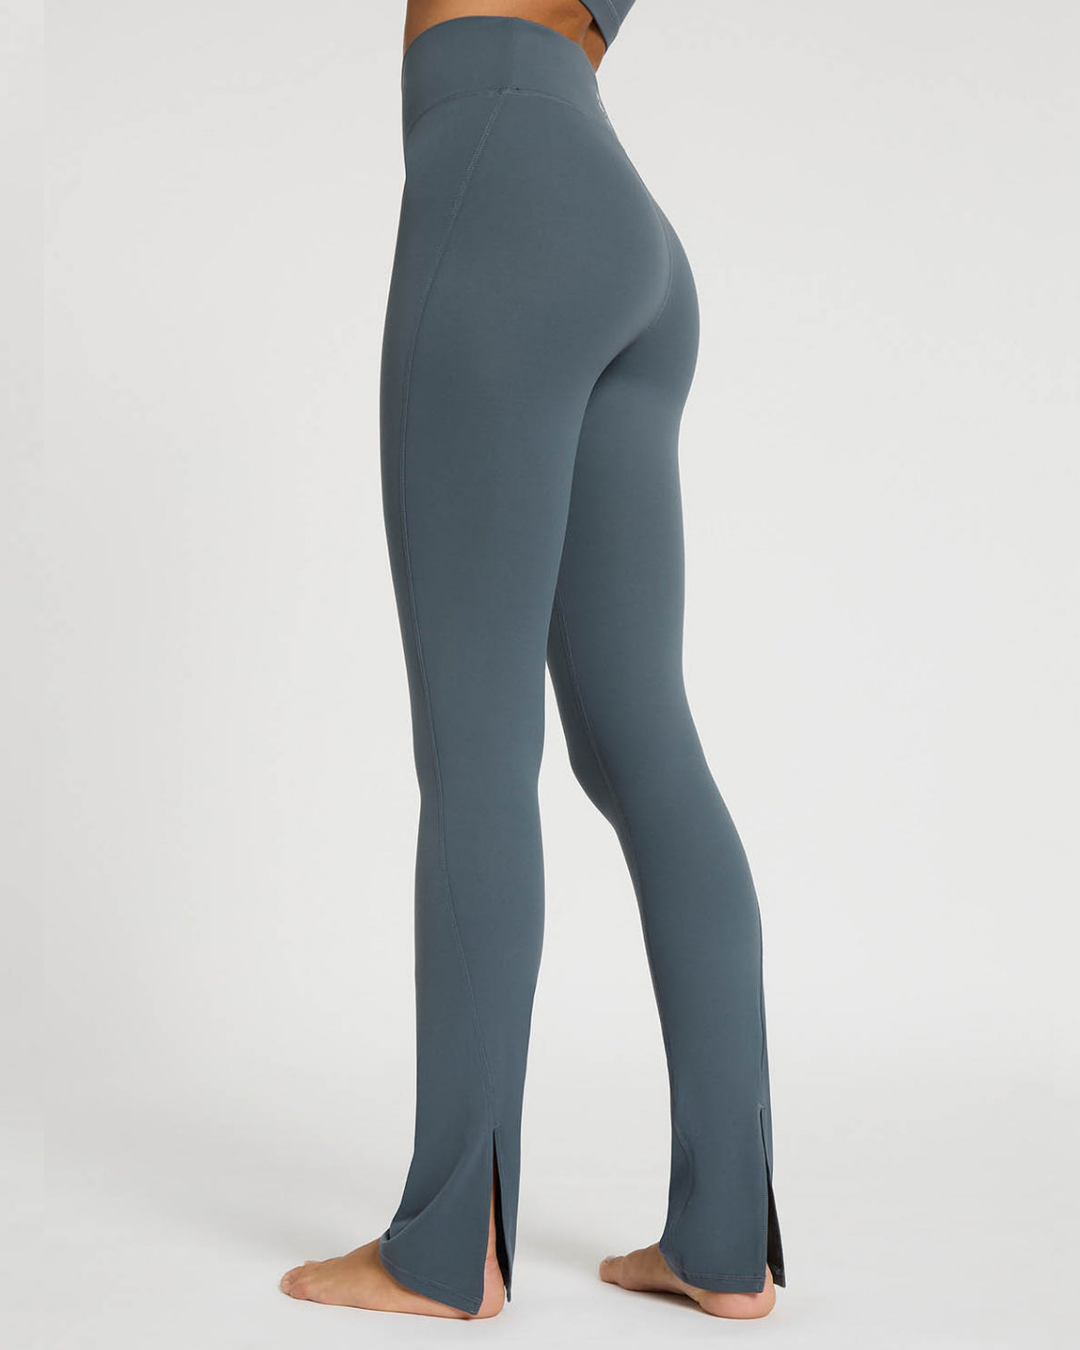 In Motion Split Leg Pant - Charcoal Activewear by Nimble - Prae Wellness